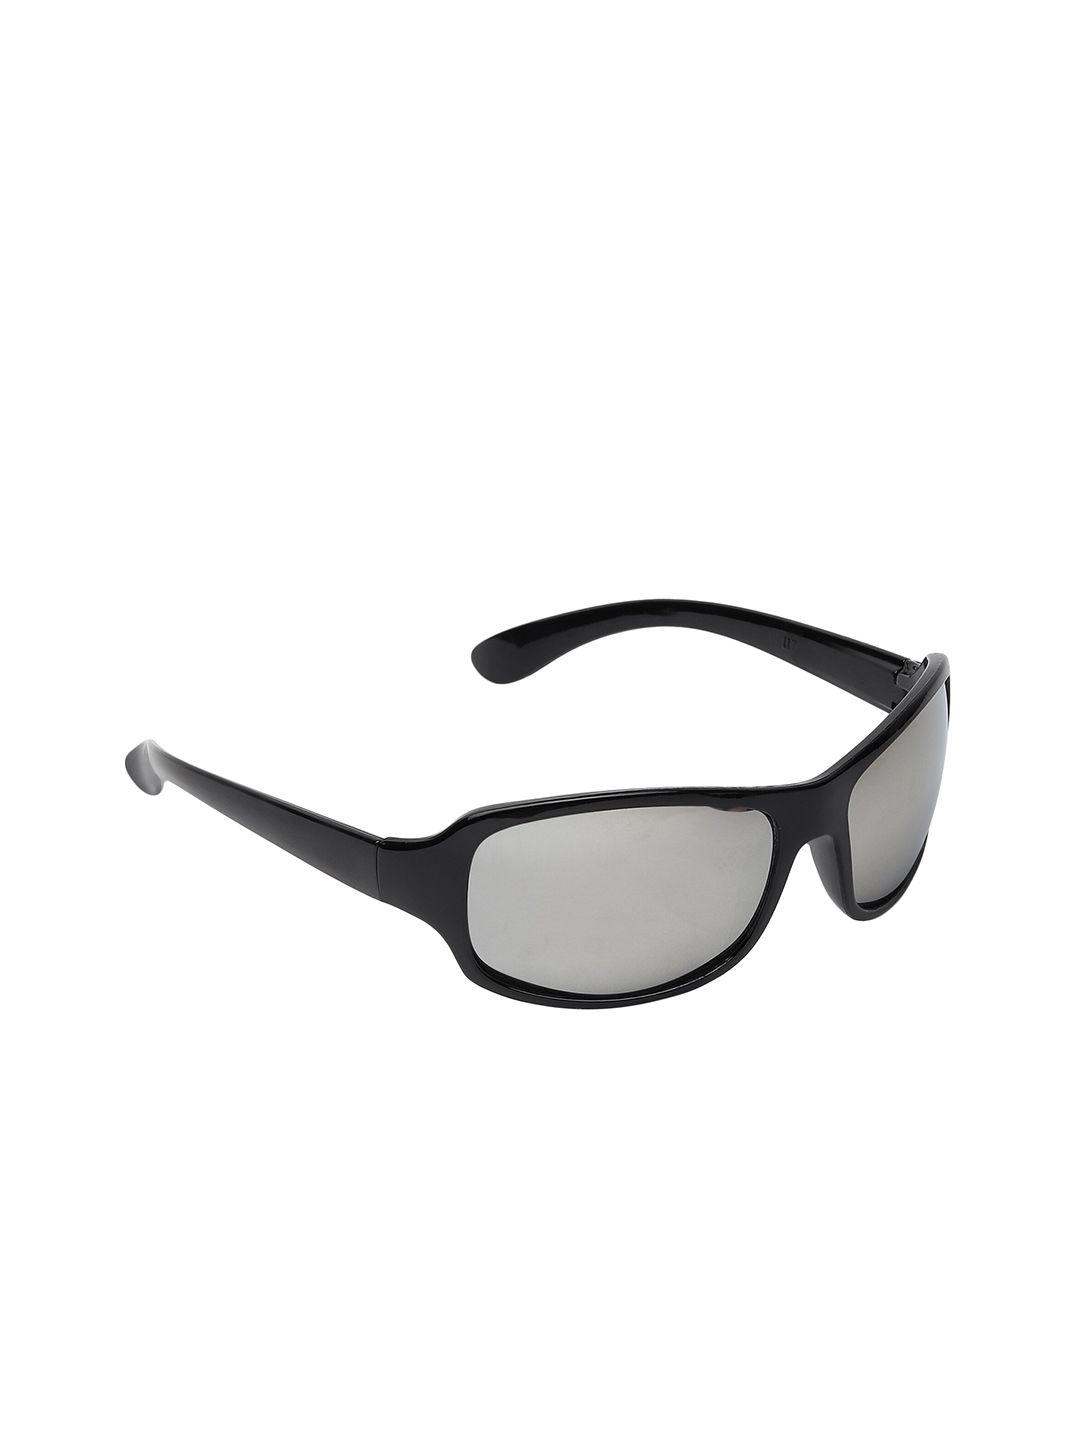 garth unisex grey lens & black sports sunglasses with uv protected lens 2053_grymer_grt